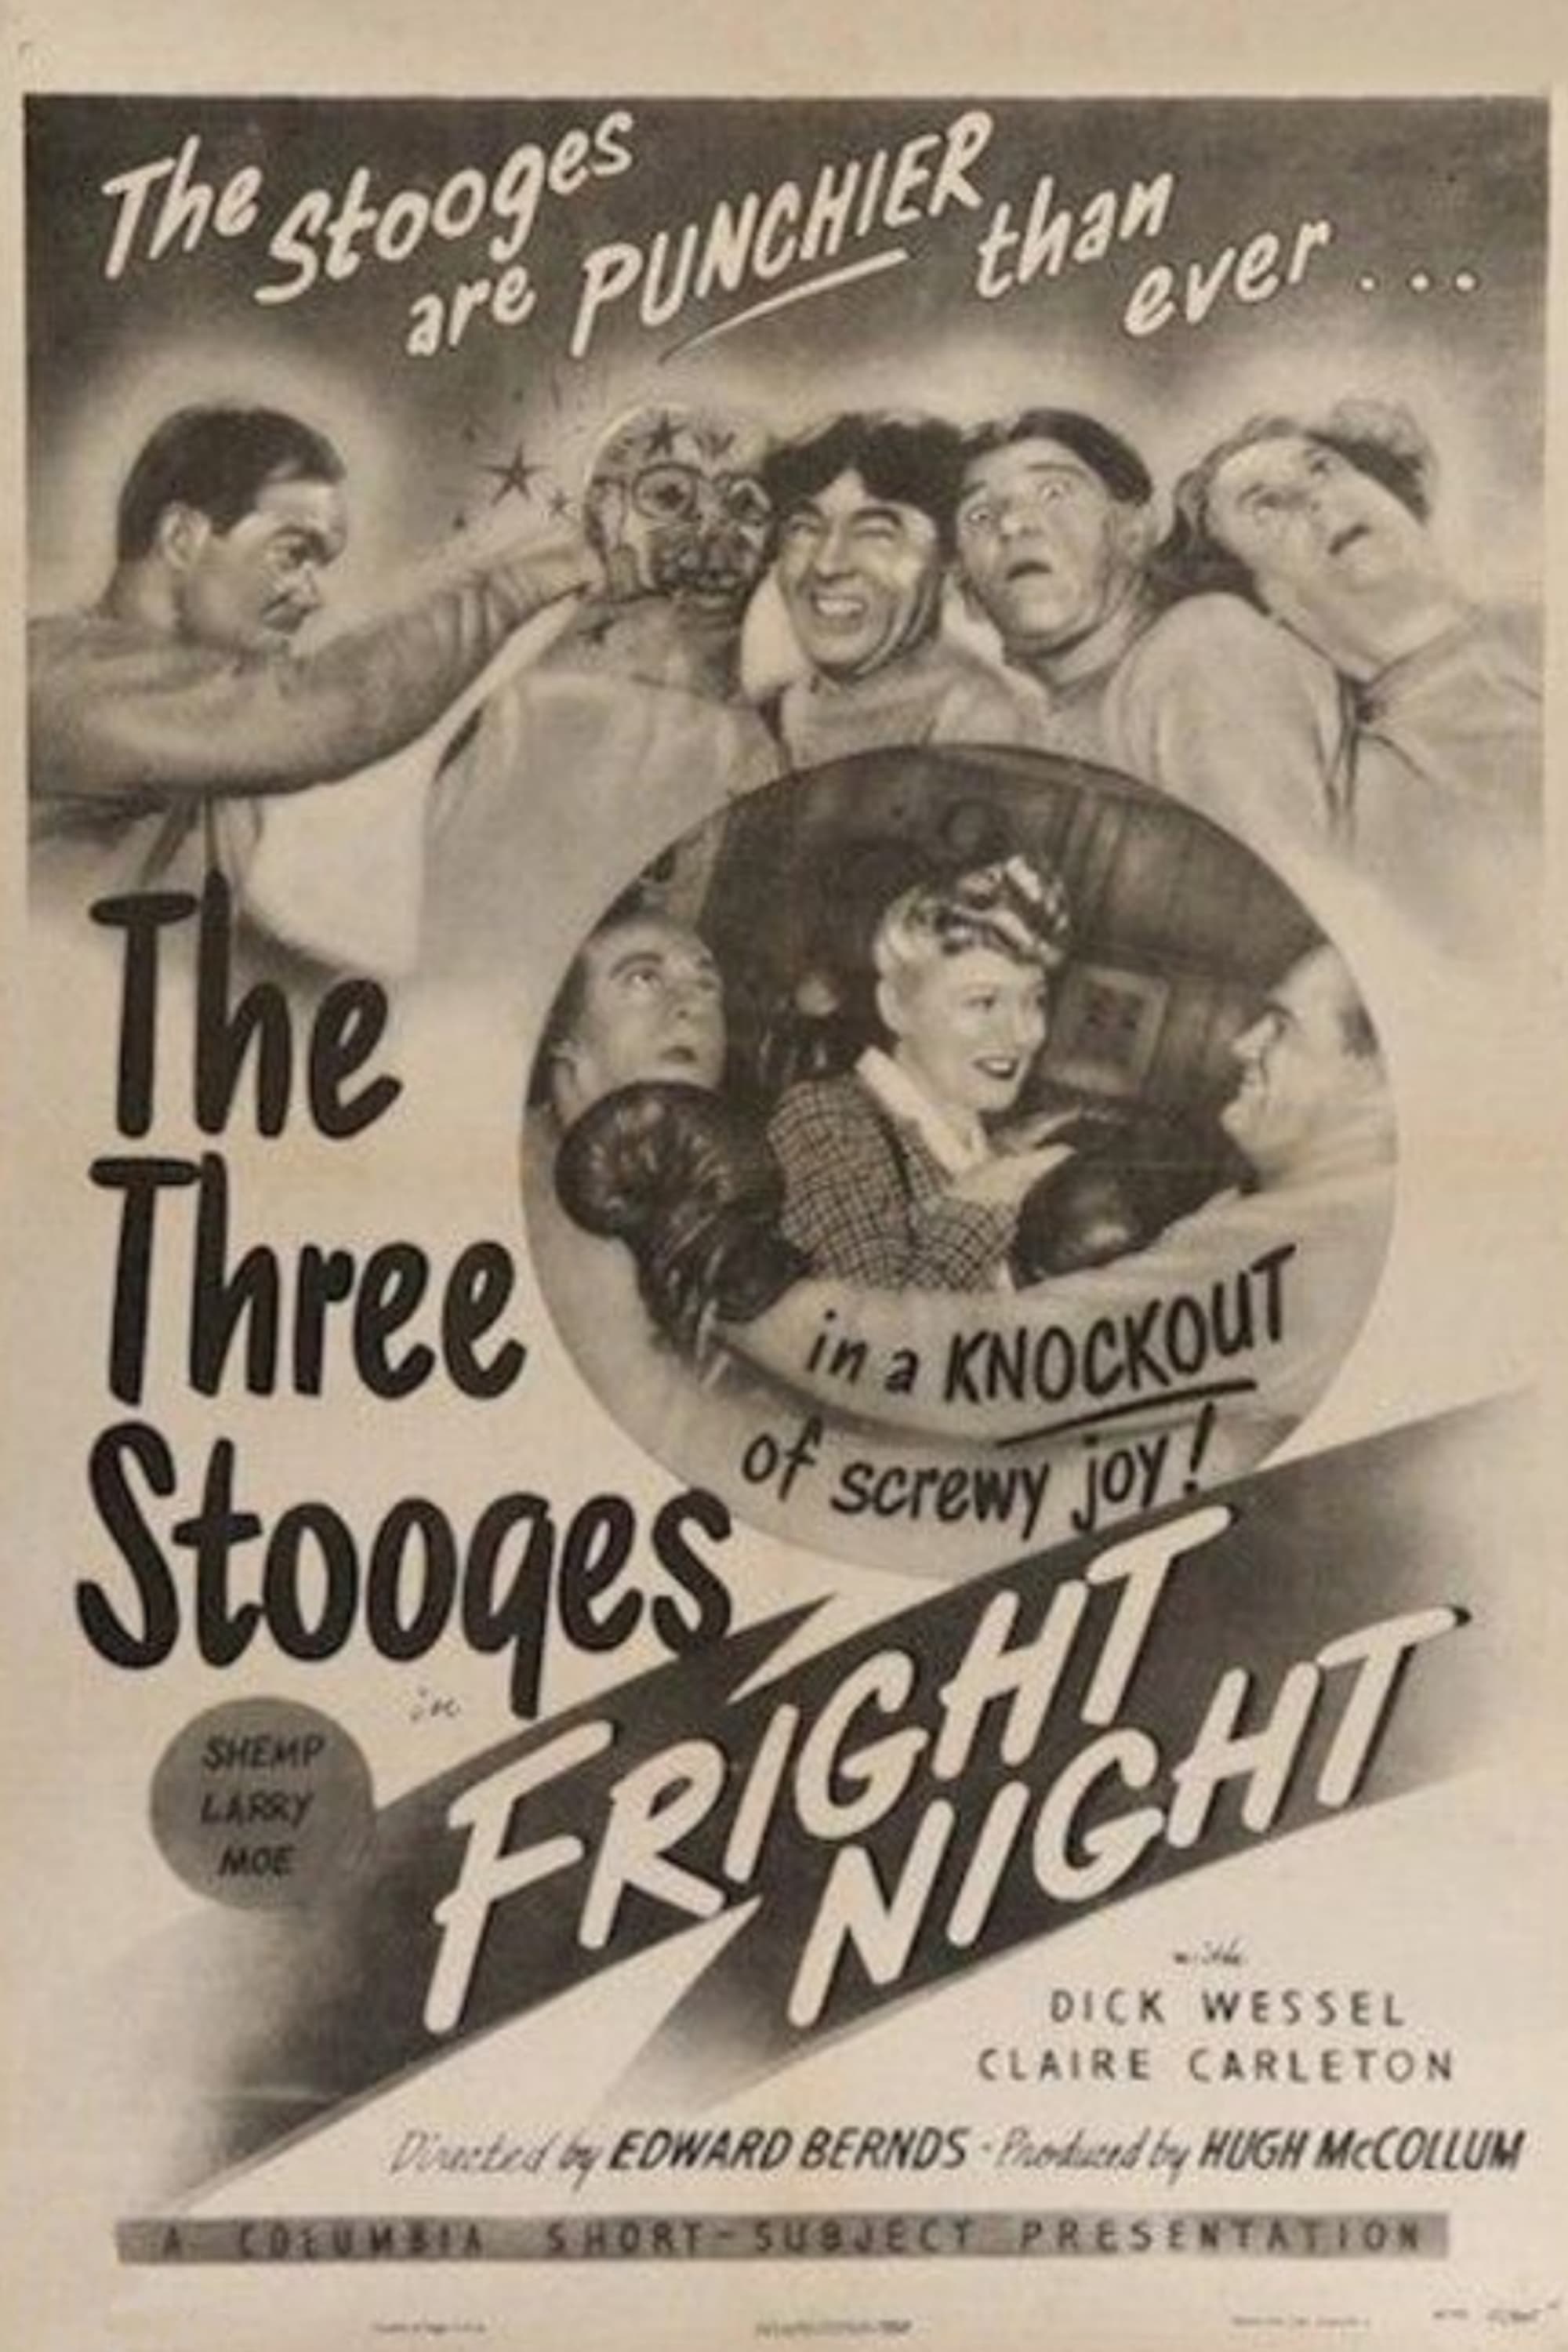 Fright Night (1947)